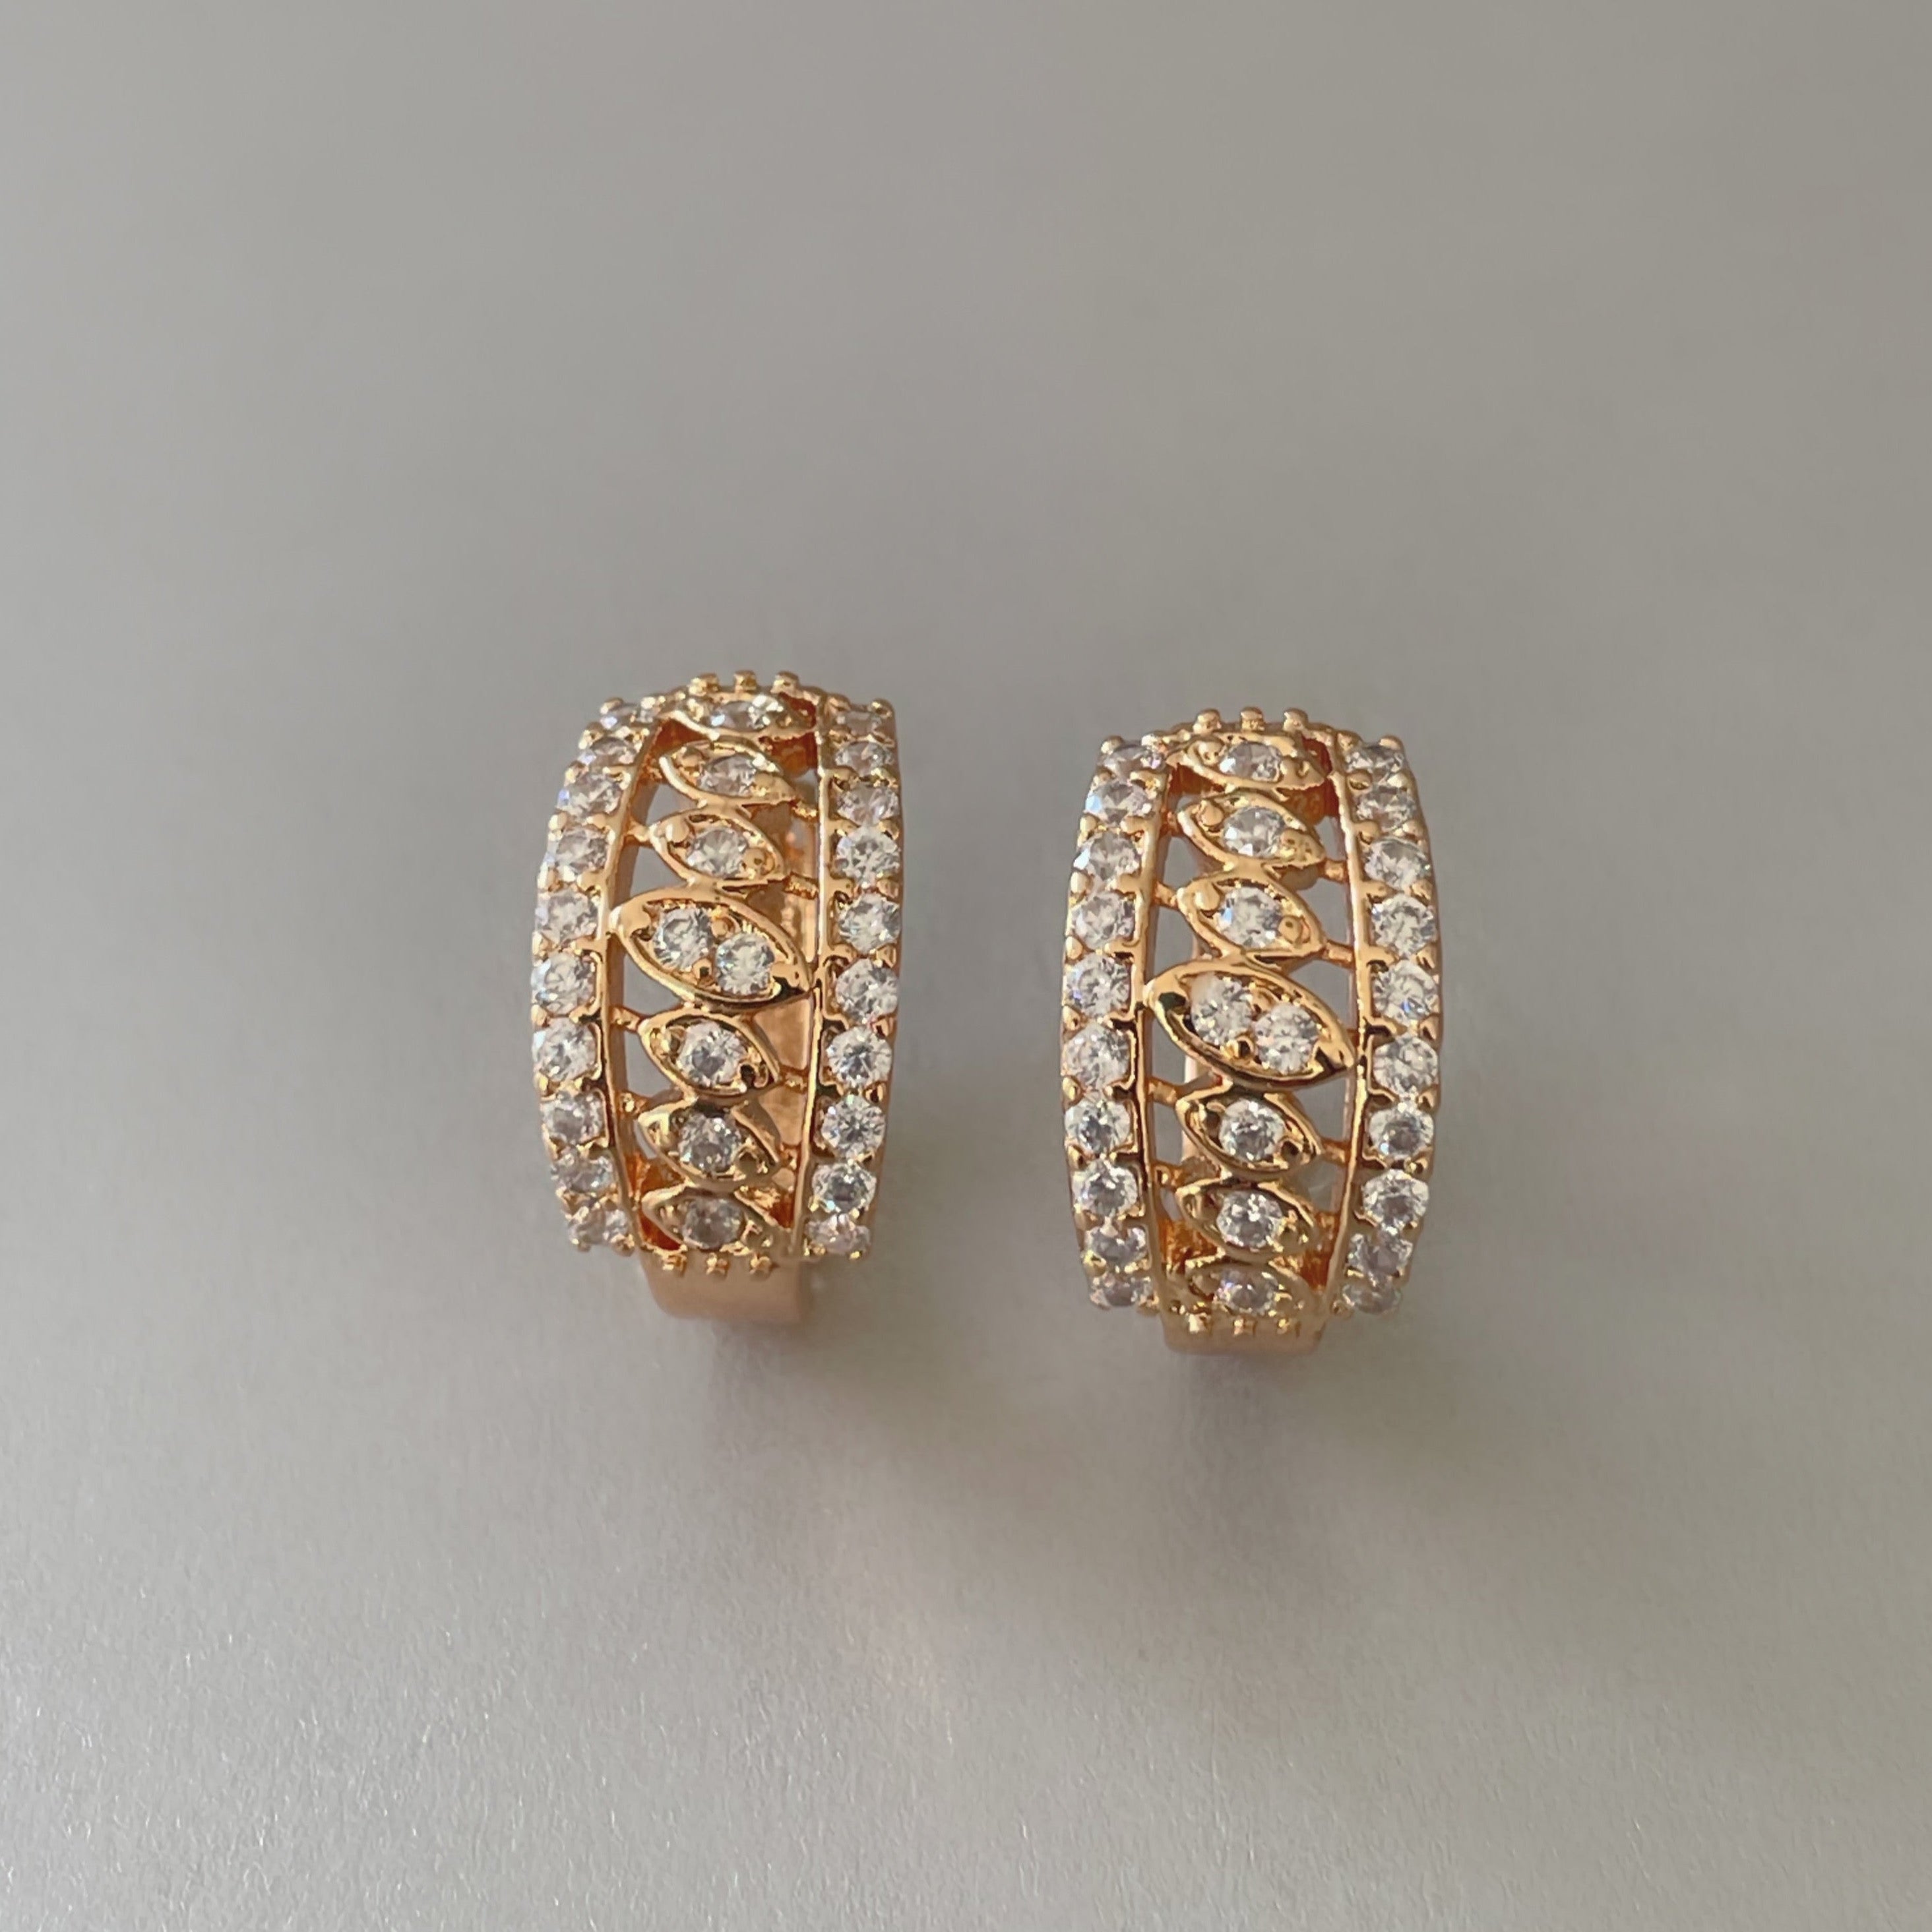 Sophia Jewelled Gold Hoops Earrings